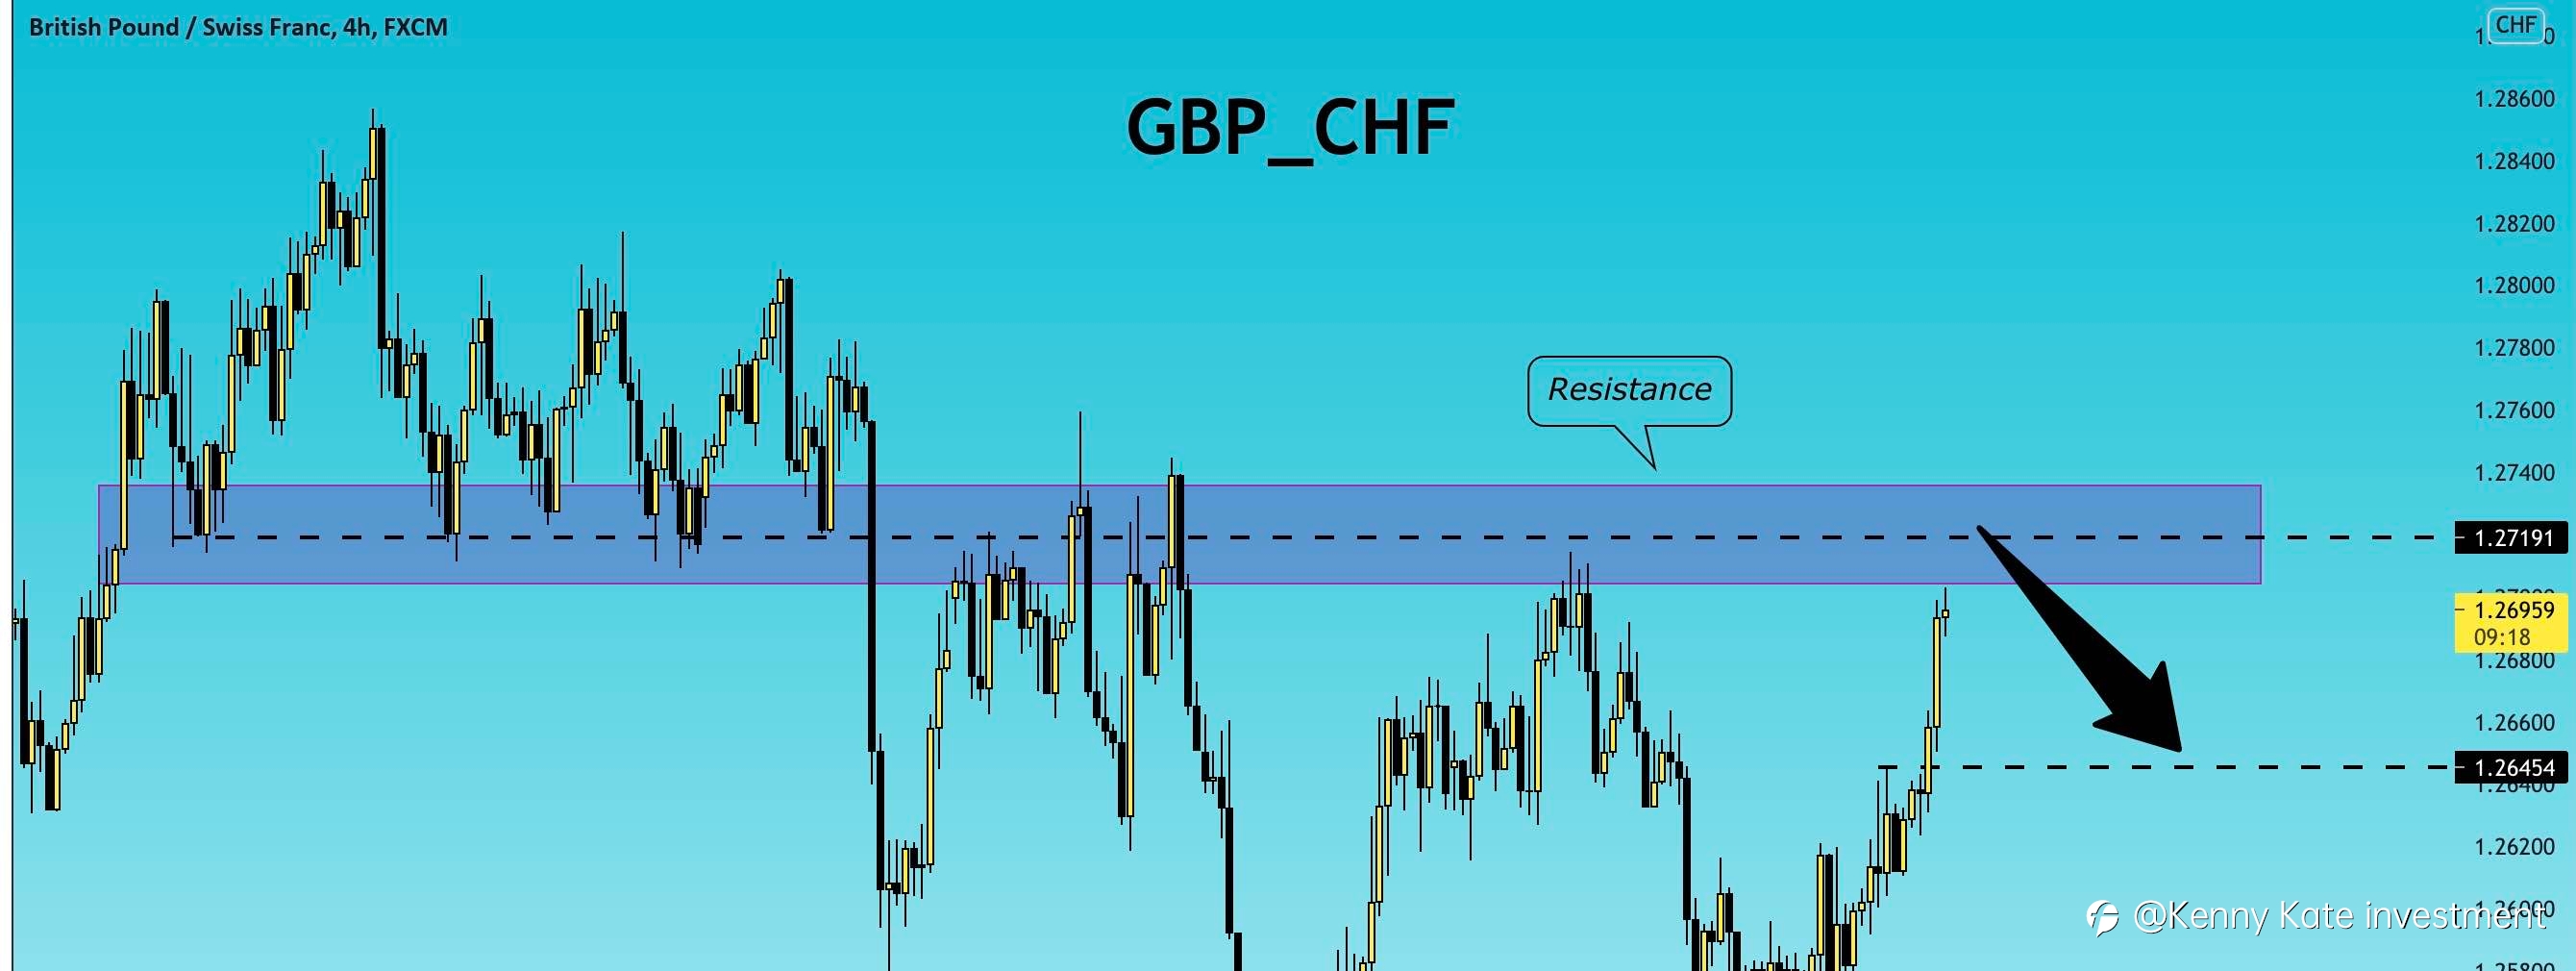 GBPCHF technical analysis(07/08/2021)